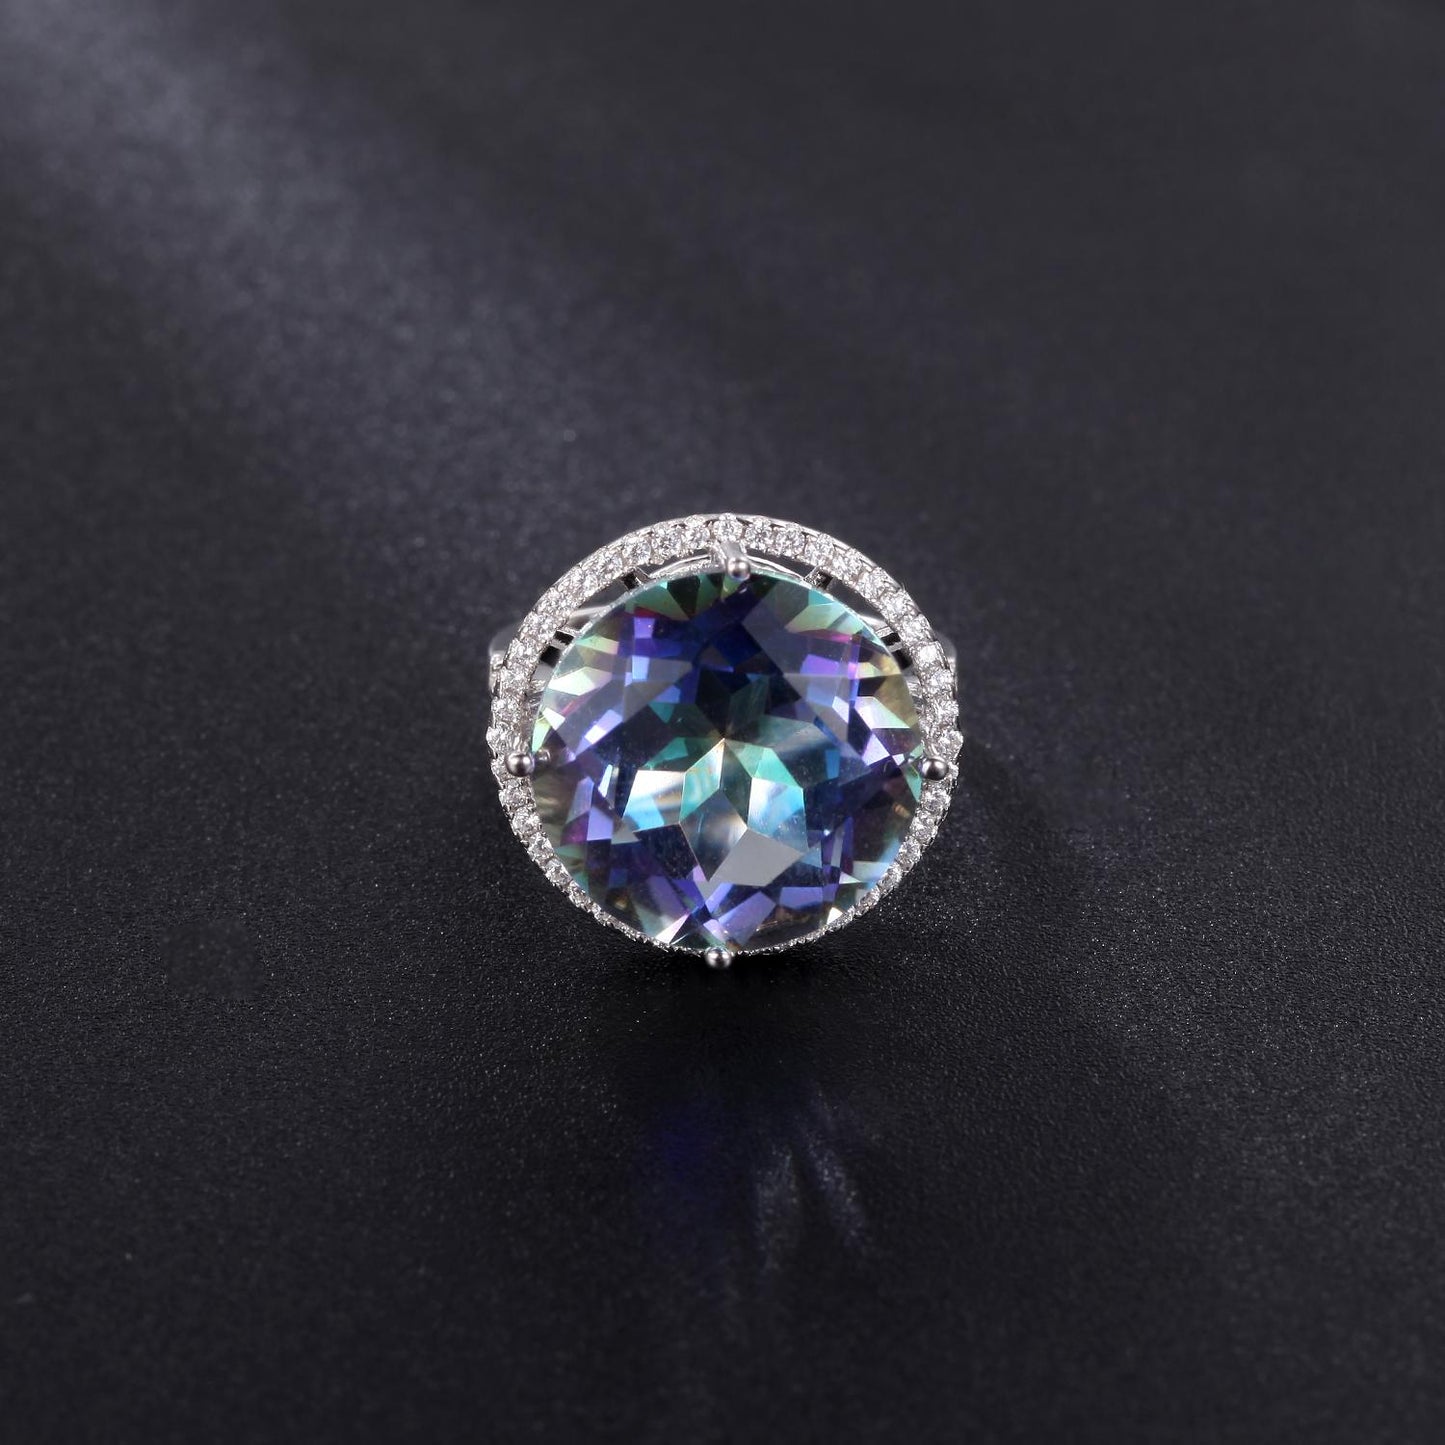 GEM&#39;S BALLET 925 Sterling Silver Gemstone Rings Blueish Mystic Topaz Vintage Cocktail Ring For Women Party Jewelrt